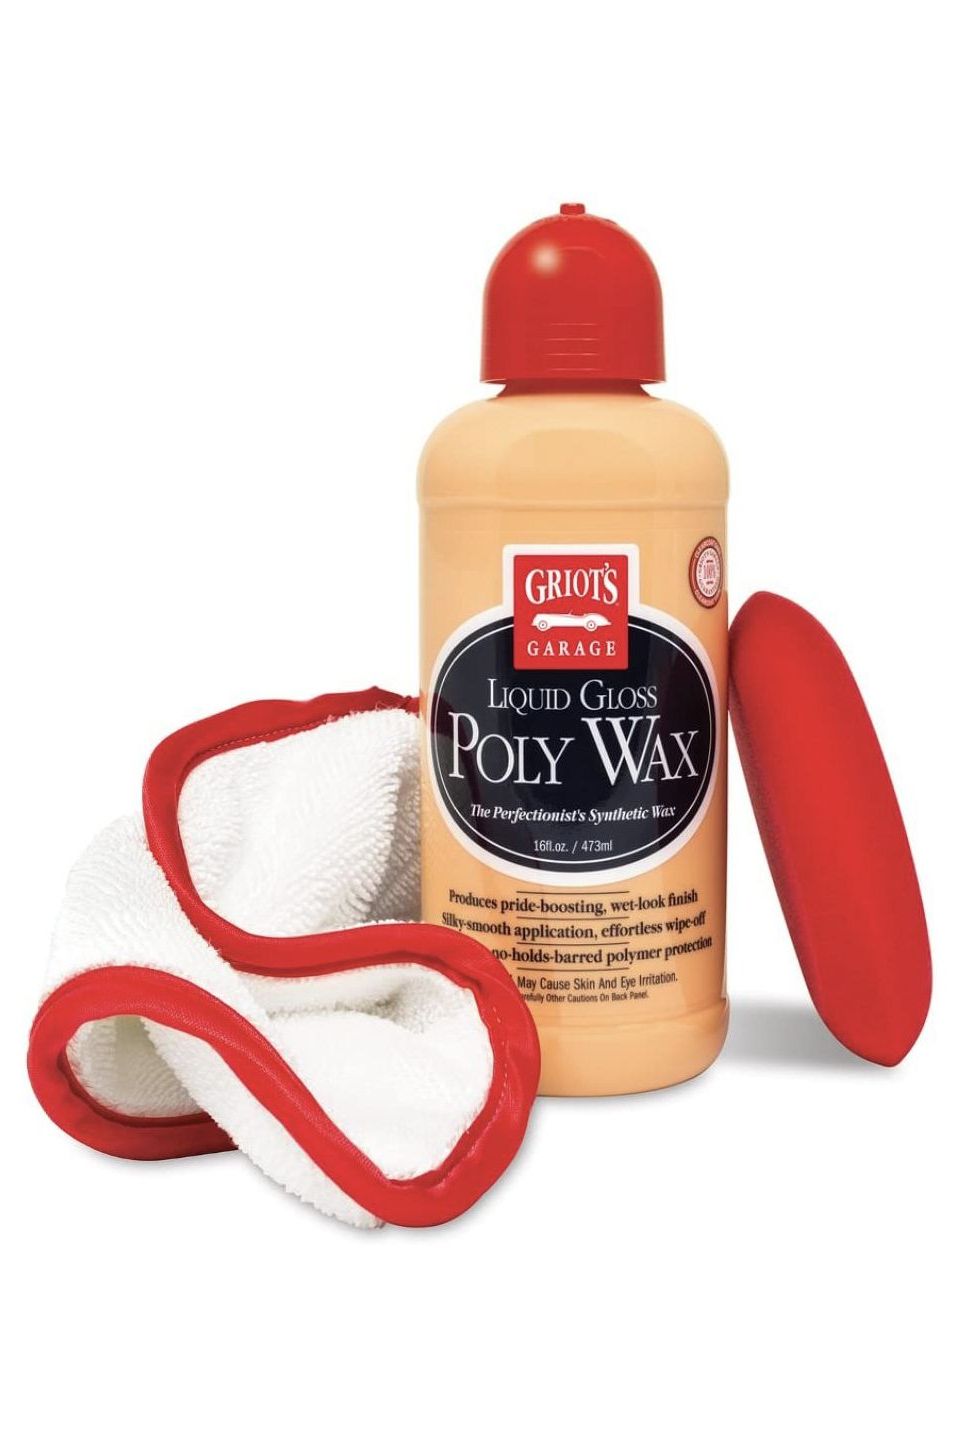 Griot's Garage Liquid Gloss Poly Wax